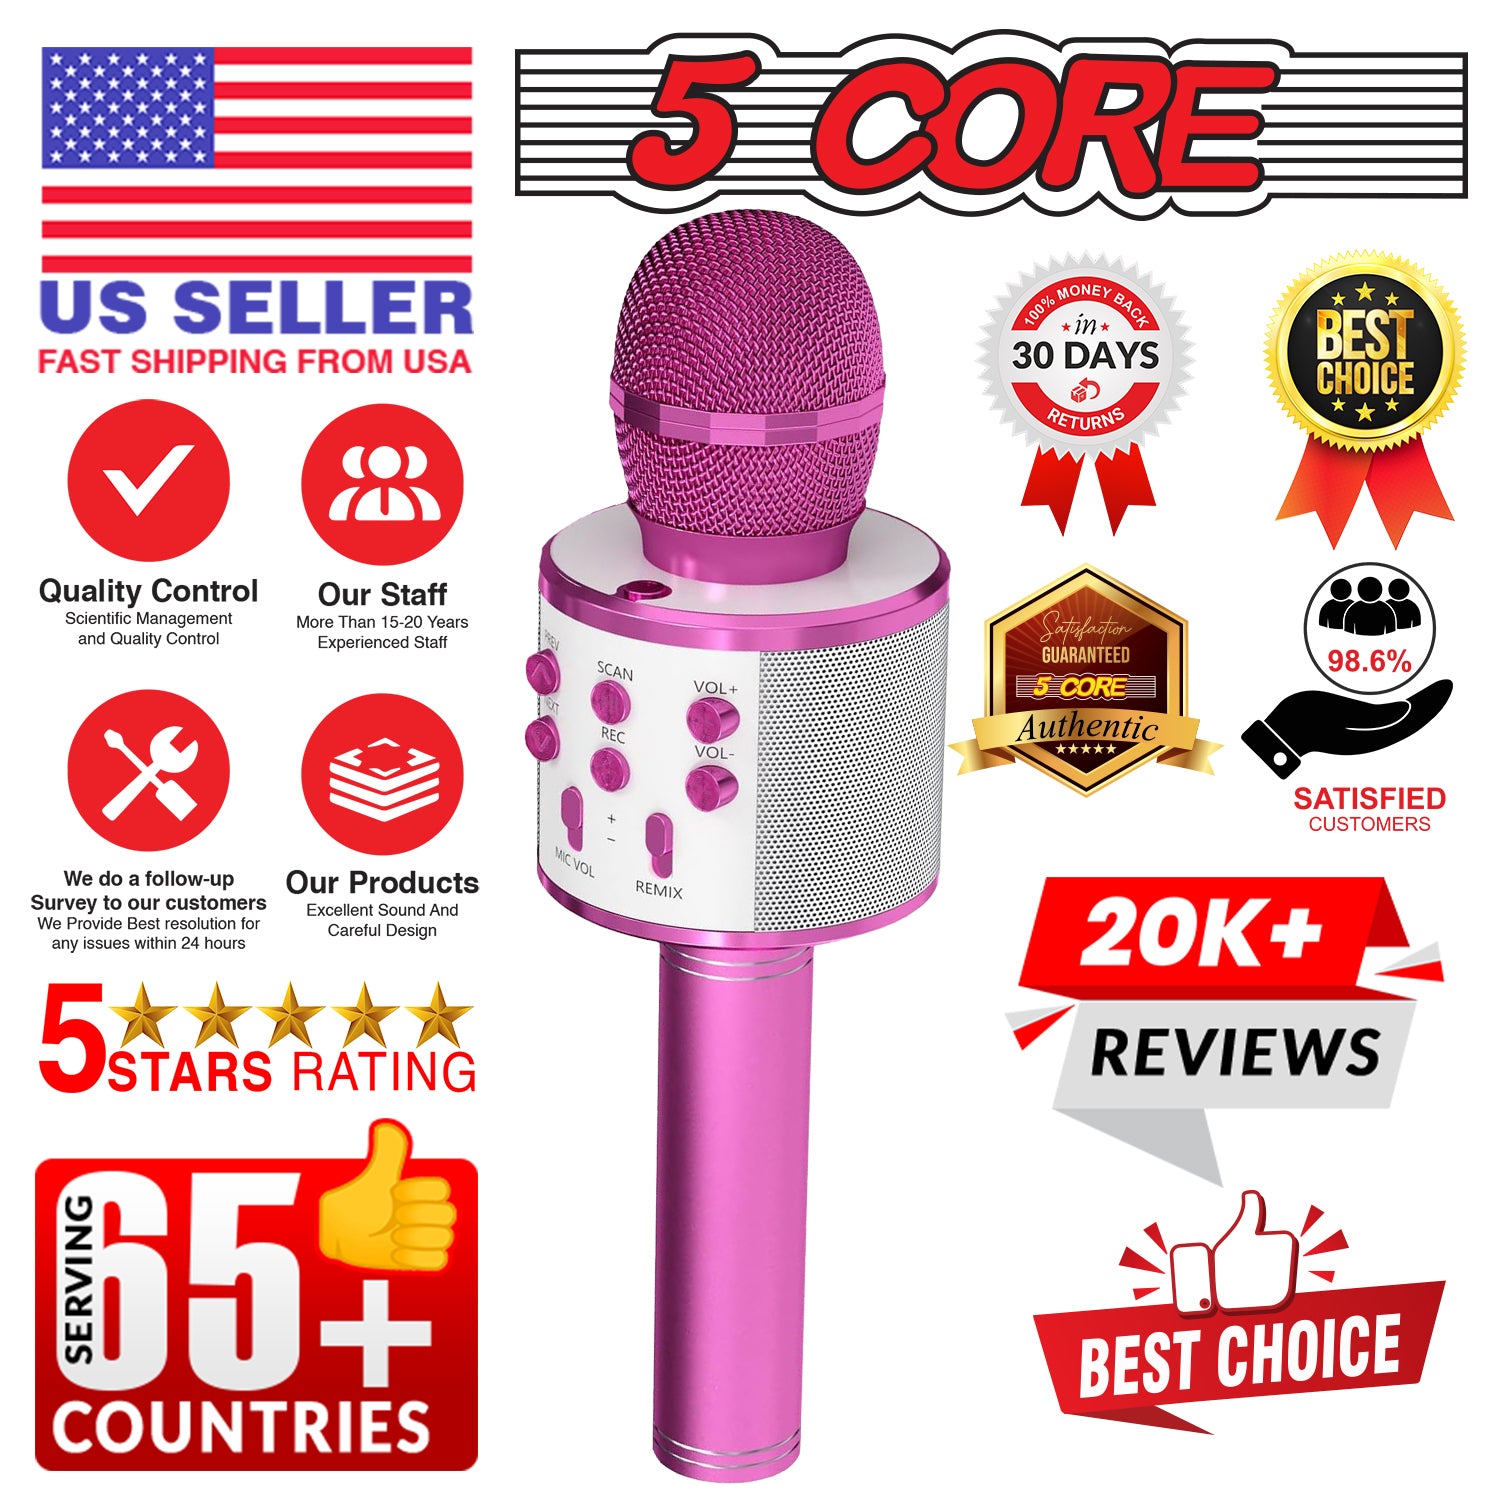 5 Core Karaoke Wireless Microphones Microfono Inalambrico Toy w Stereo Speaker SD Card & USB Playback